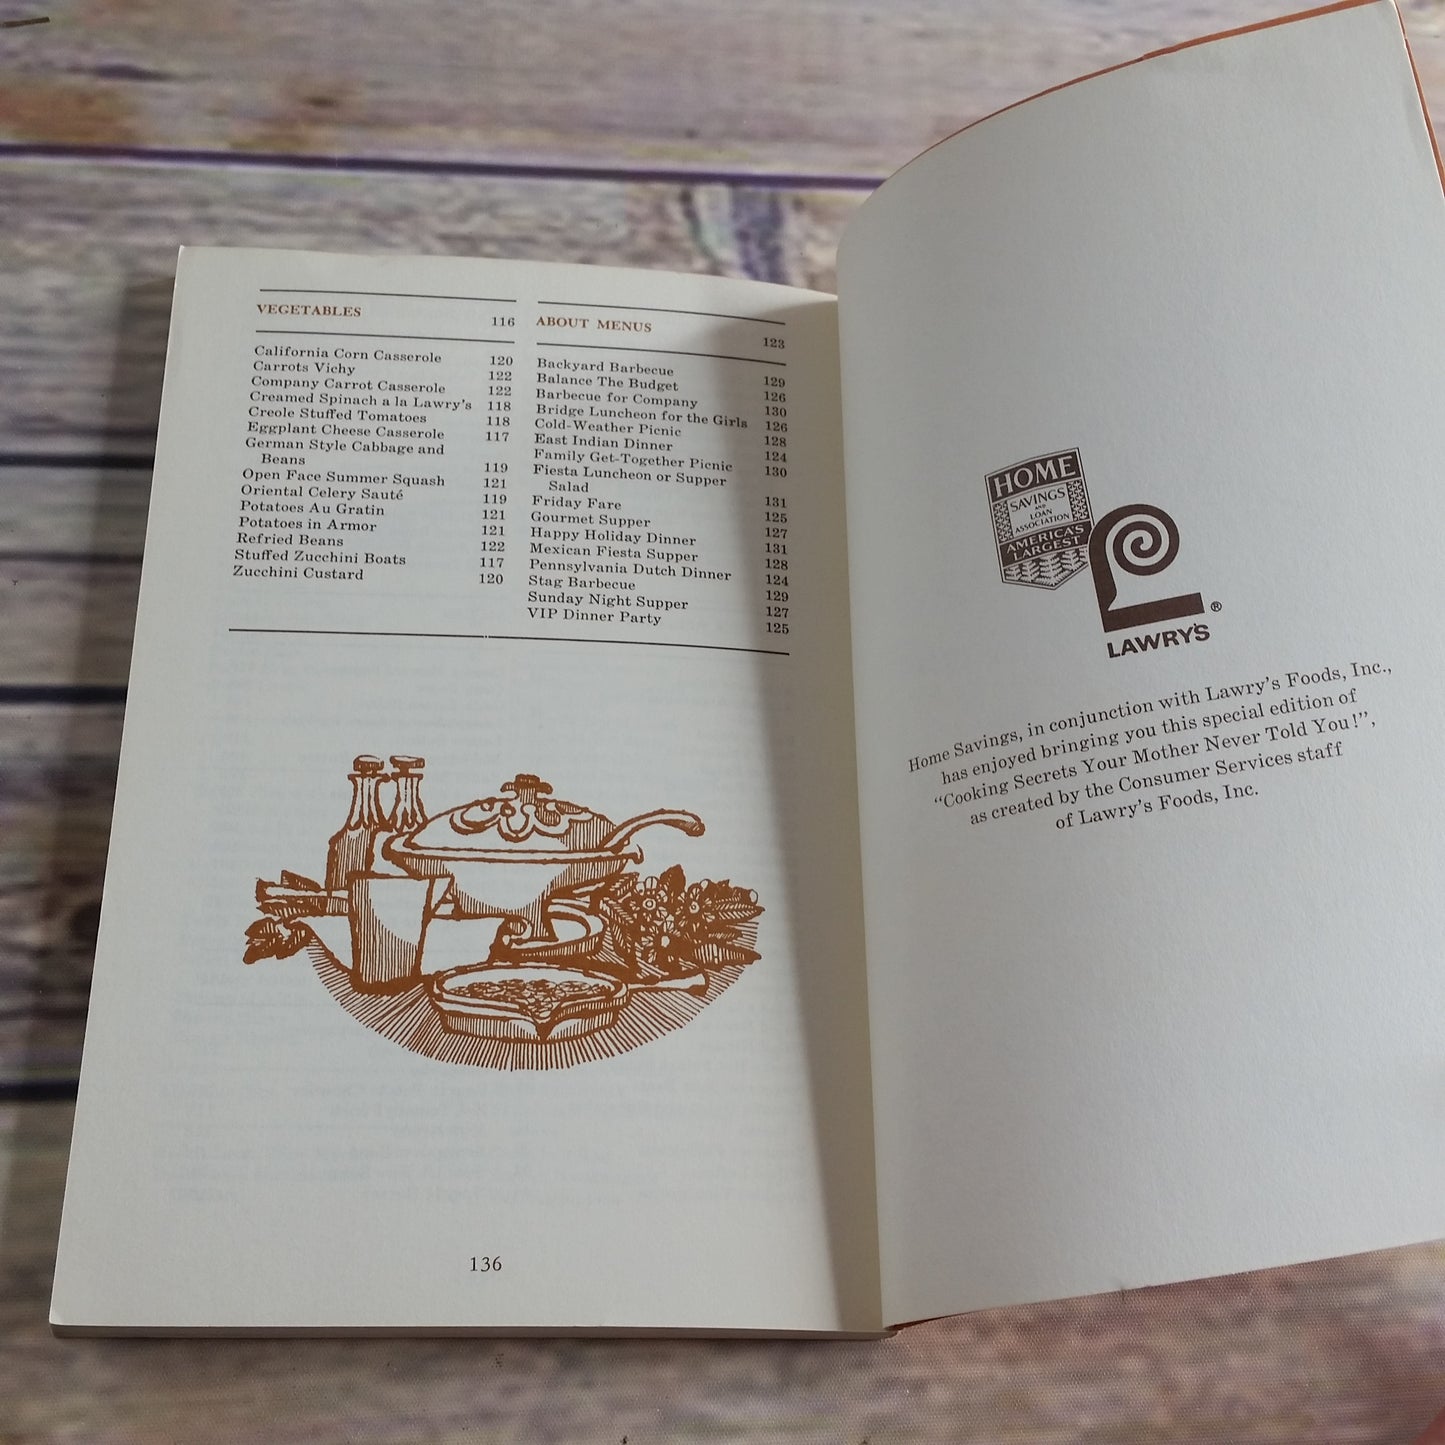 Vintage Cookbook Lawry's Foods Cooking Secrets Your Mother Never Told You 1977 Paperback